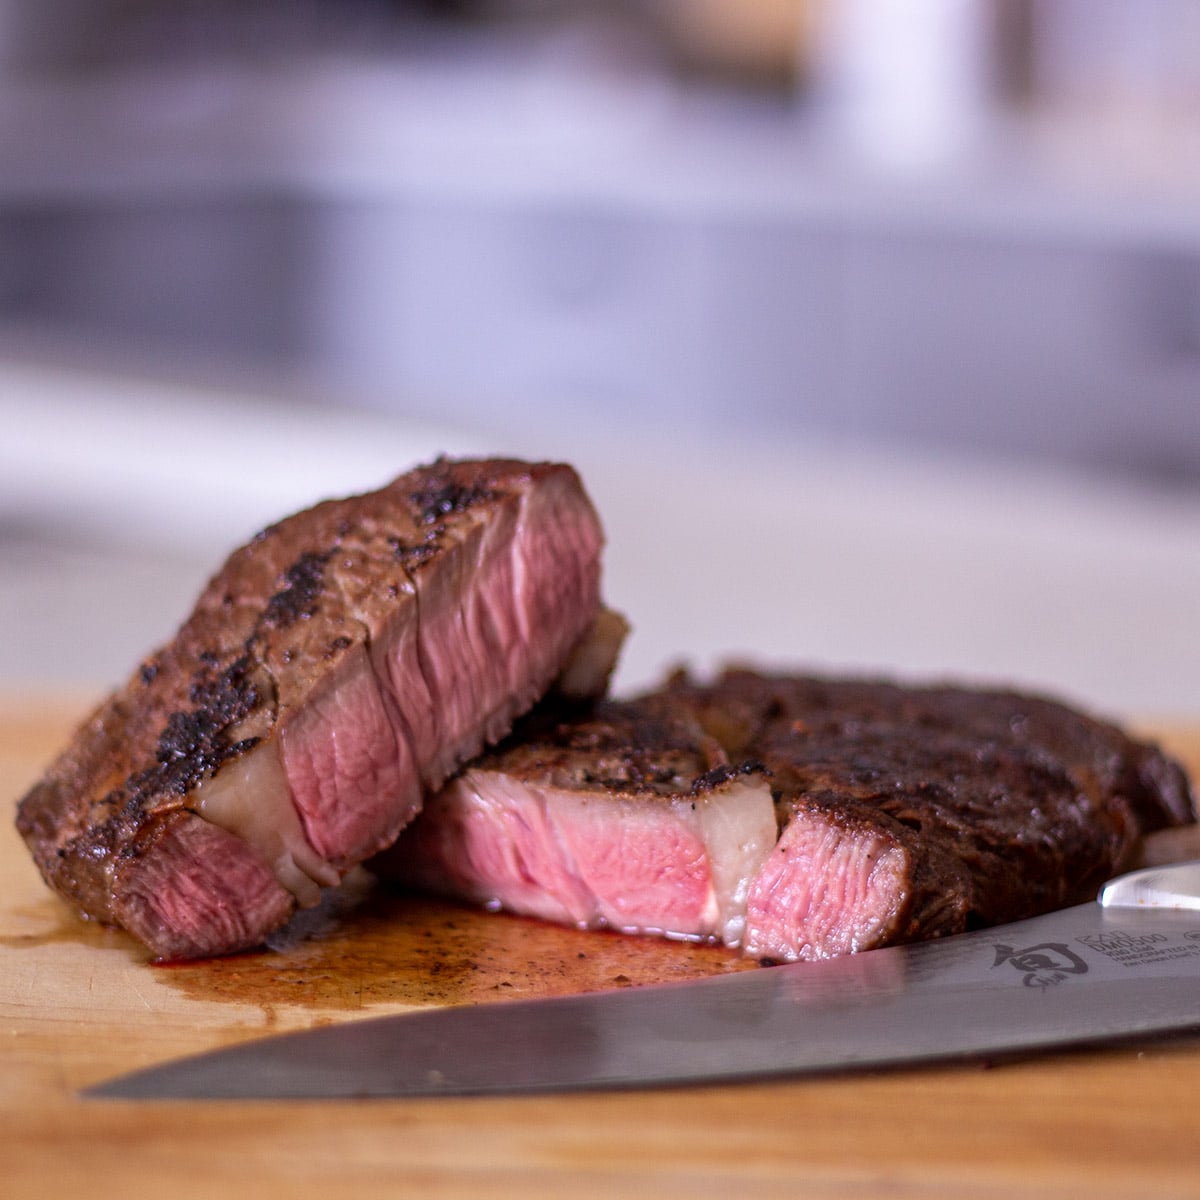 Vide Ribeye Steak Recipe - Got This